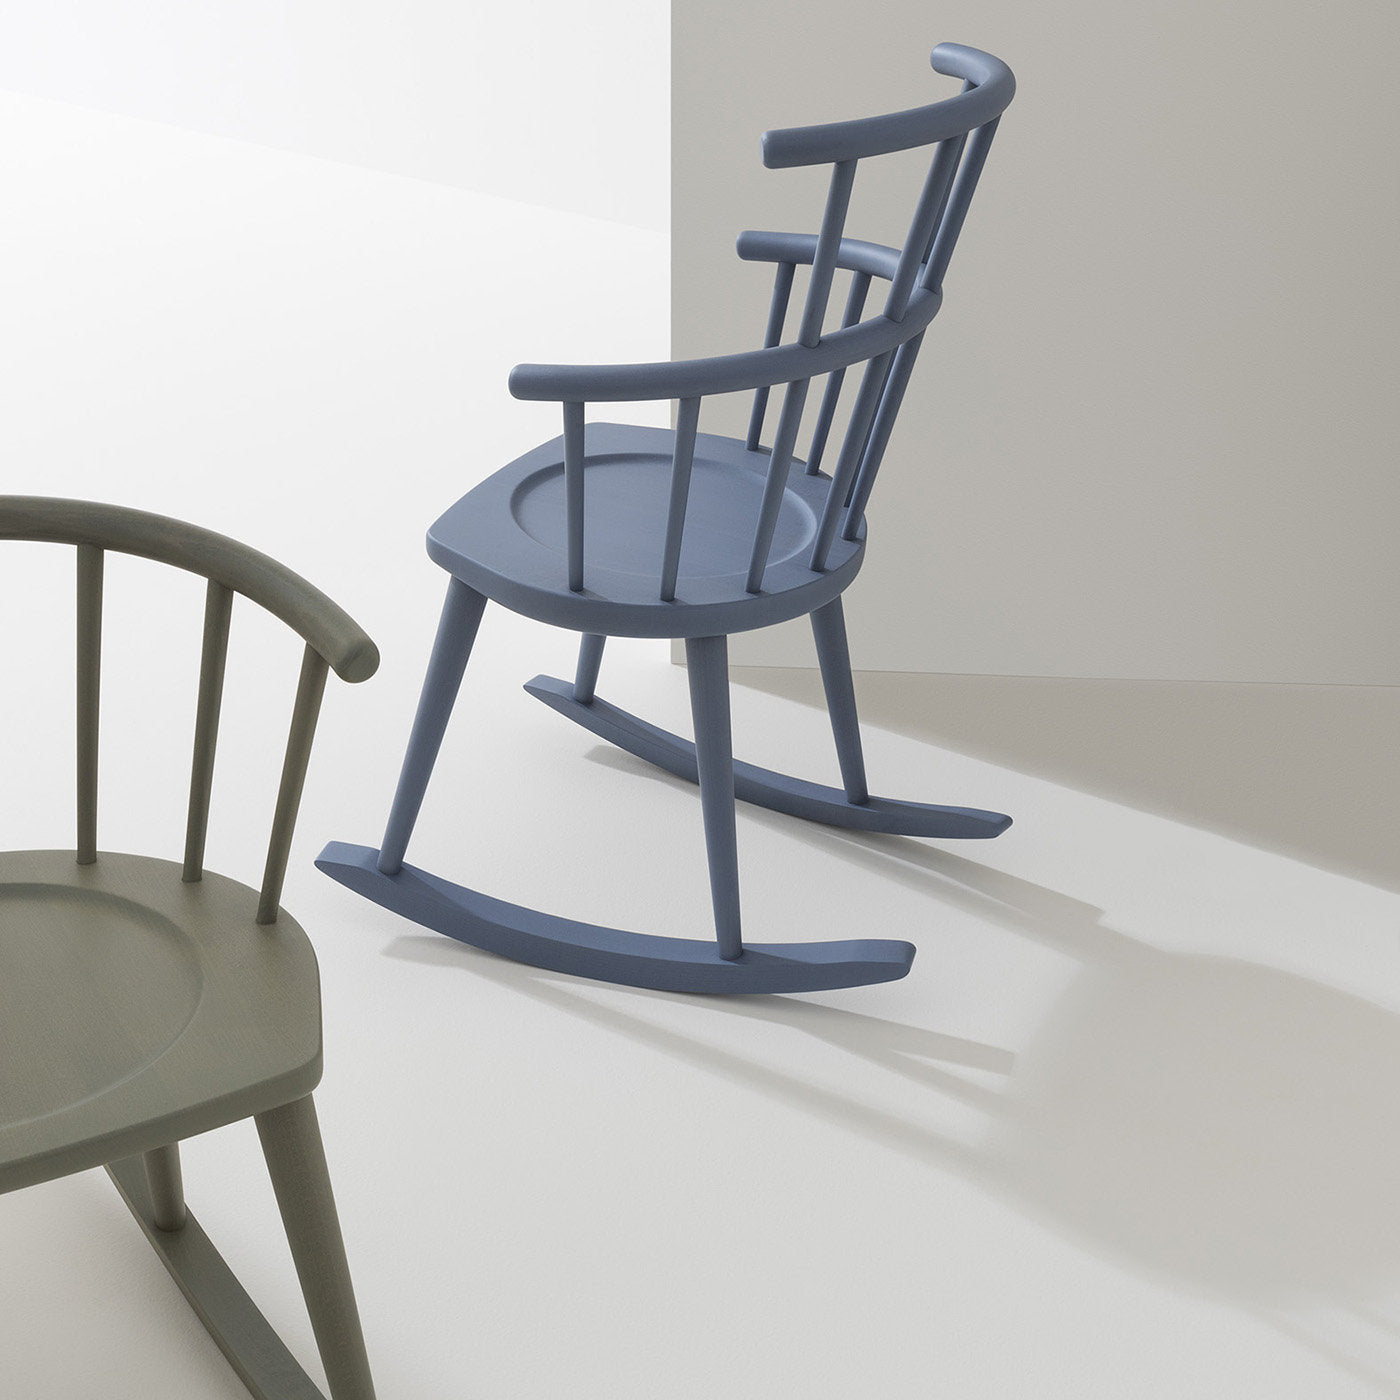 W. 604 Light Blue Rocking Chair by Fabrizio Gallinaro - Alternative view 1